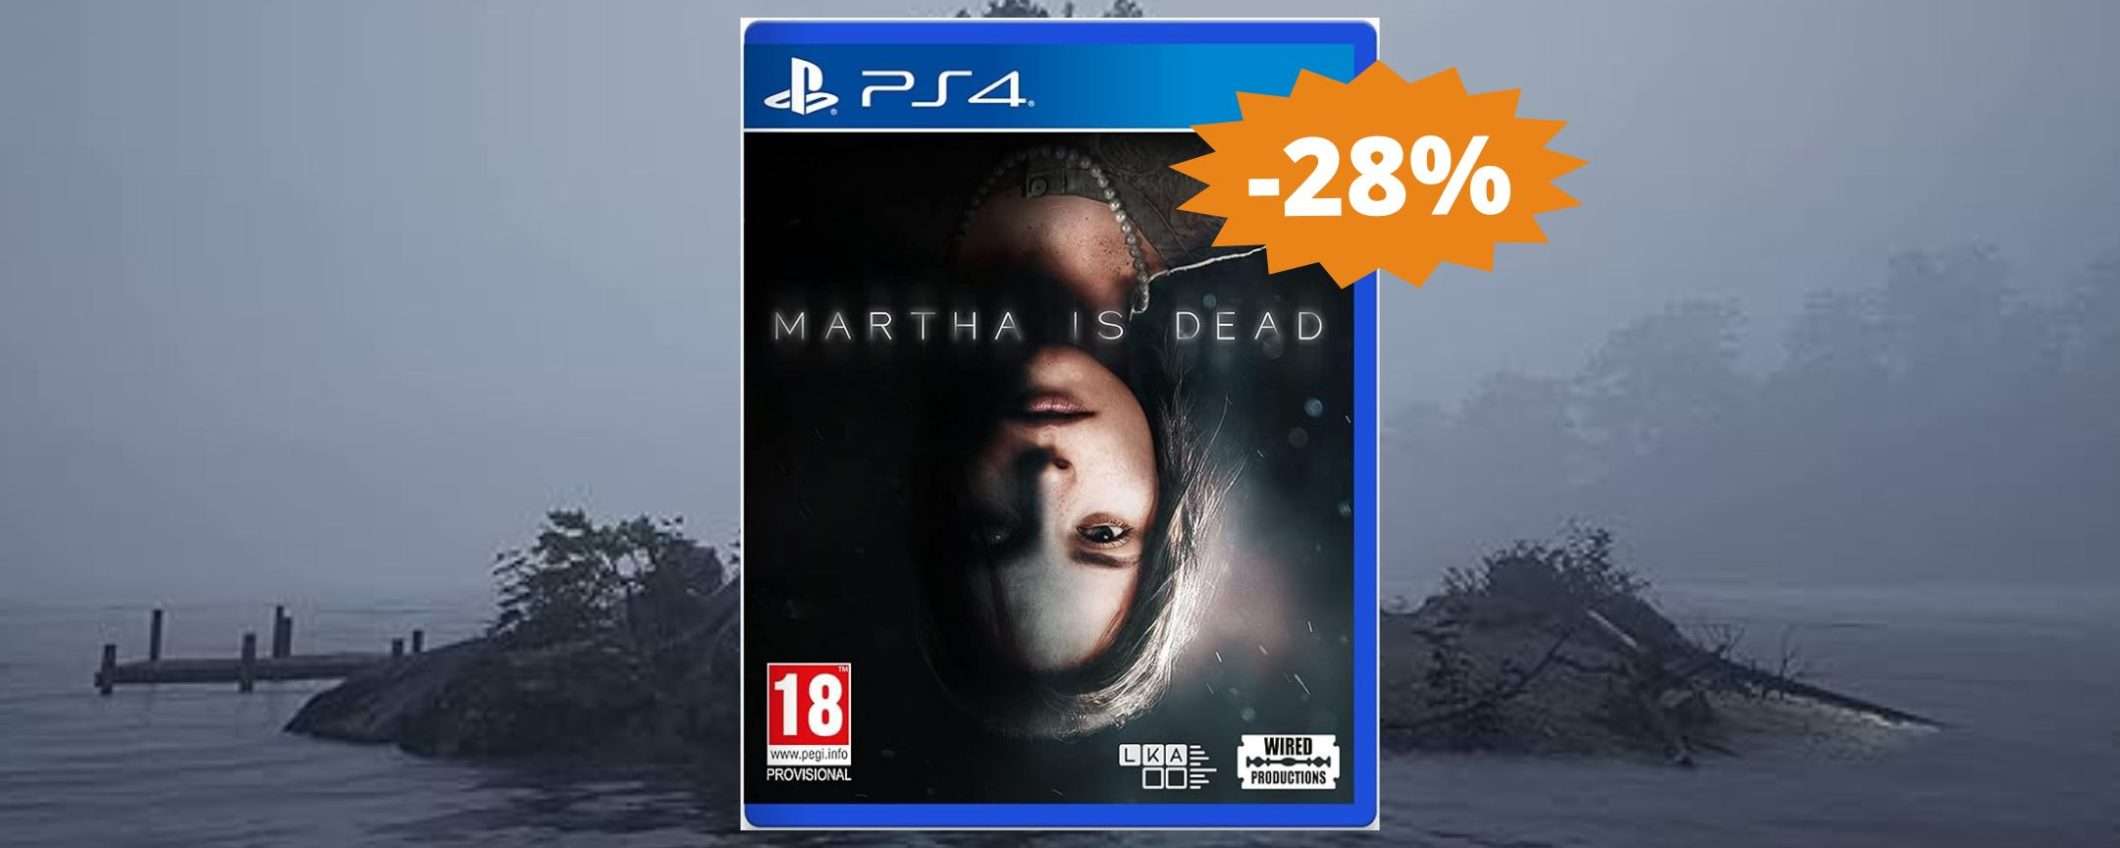 Martha Is Dead per PS4: un'avventura oscura (-28%)